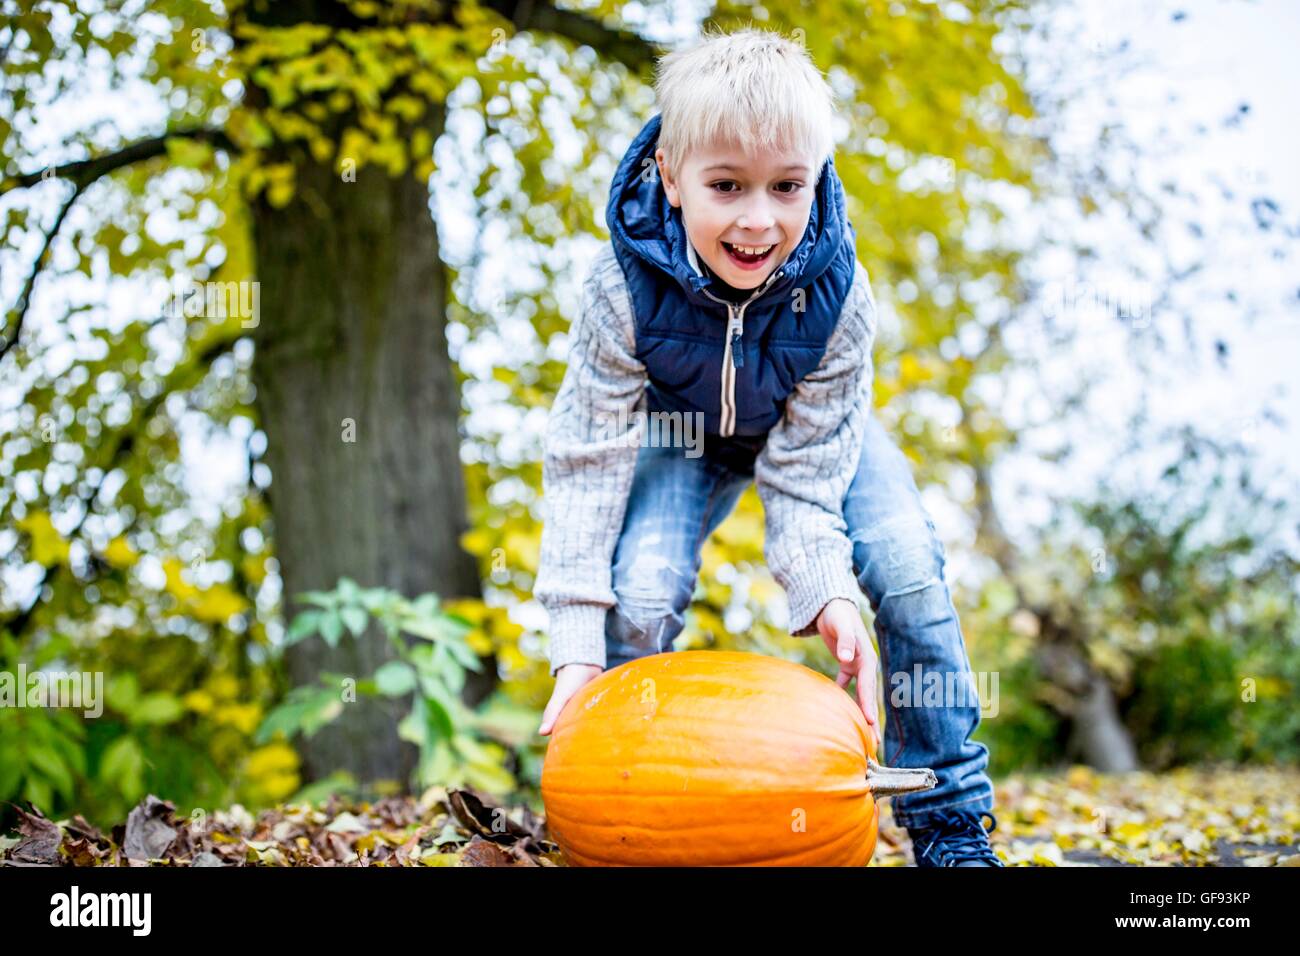 MODEL RELEASED. Boy picking Halloween pumpkin. Stock Photo